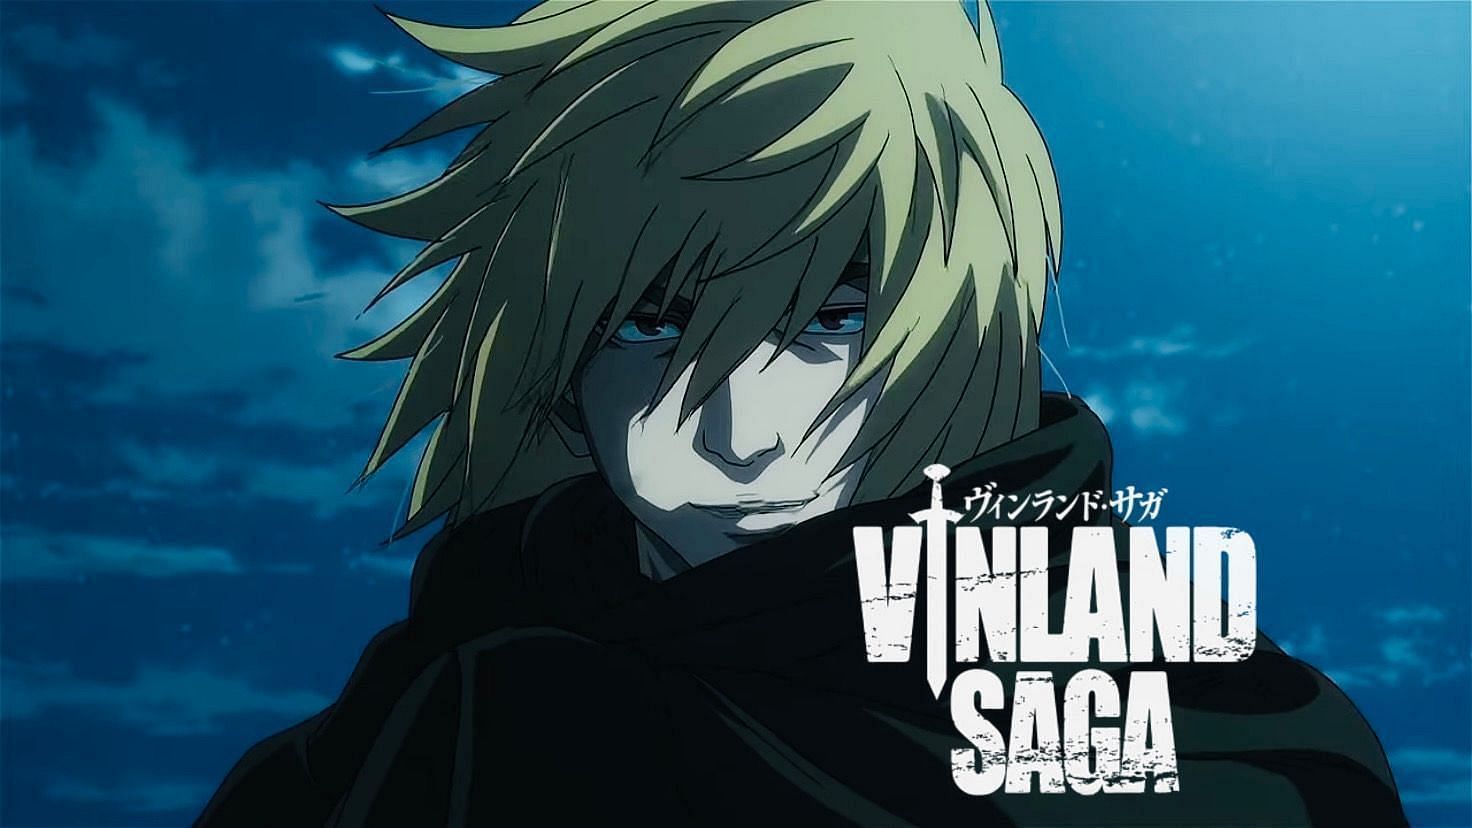 Vinland Saga season 2 voice actors and where you've heard them